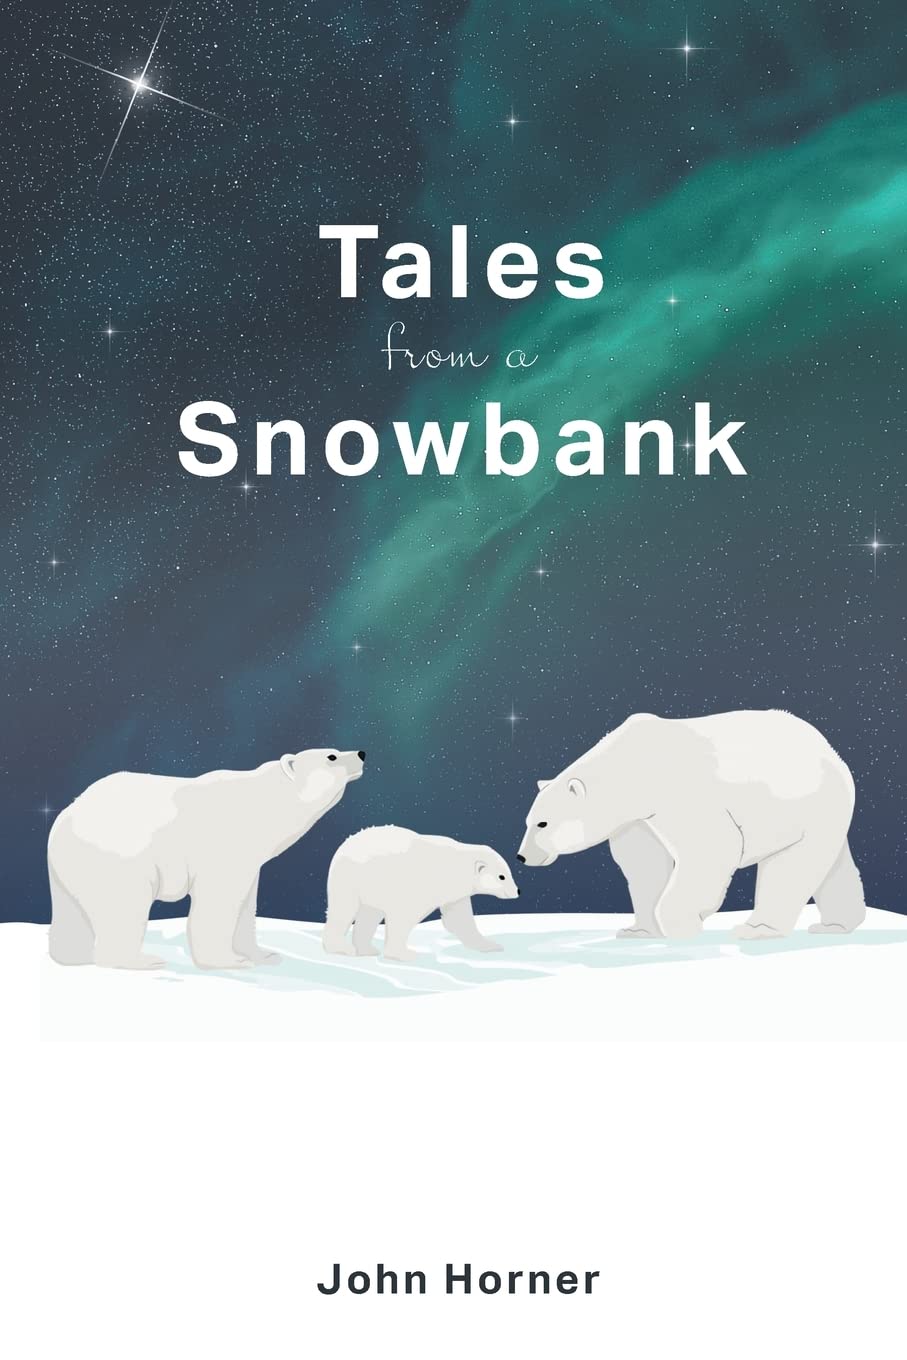 Tales from a Snowbank [John Horner]